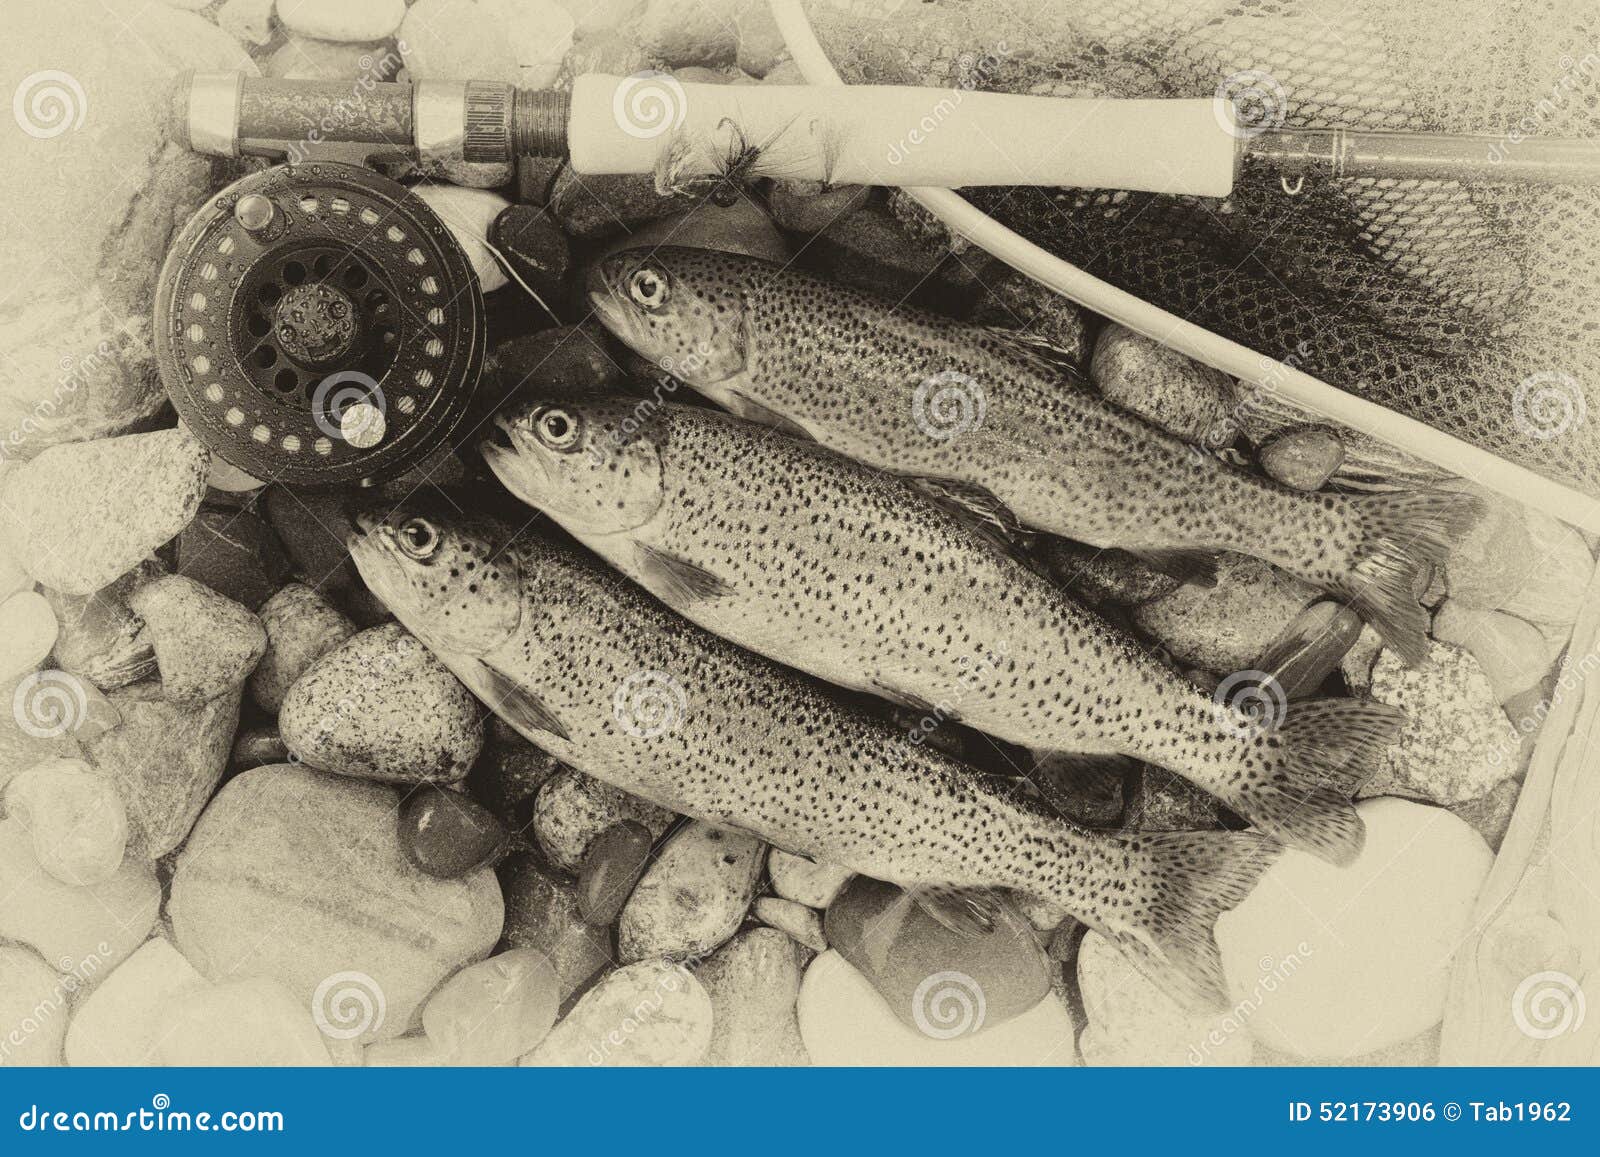 6,060 Equipment Fishing Vintage Stock Photos - Free & Royalty-Free